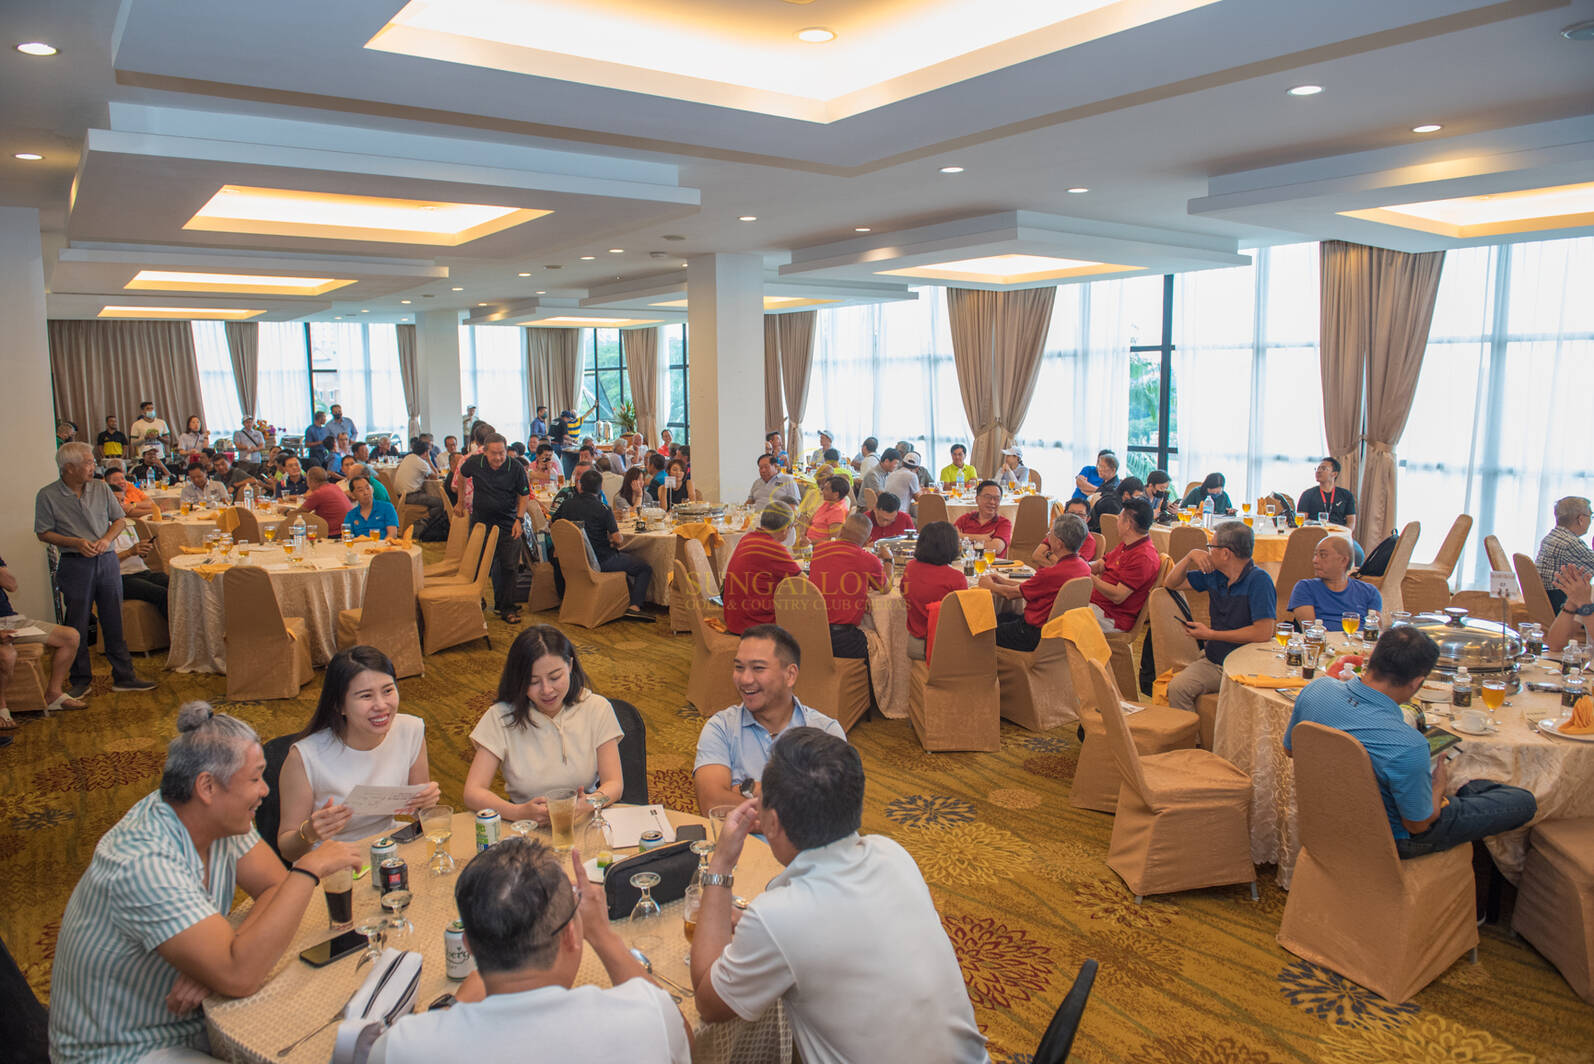 UTAR Hospital Charity Golf Meet 2022 - Venue sponsored by Sin Heap Lee Development Sdn Bhd